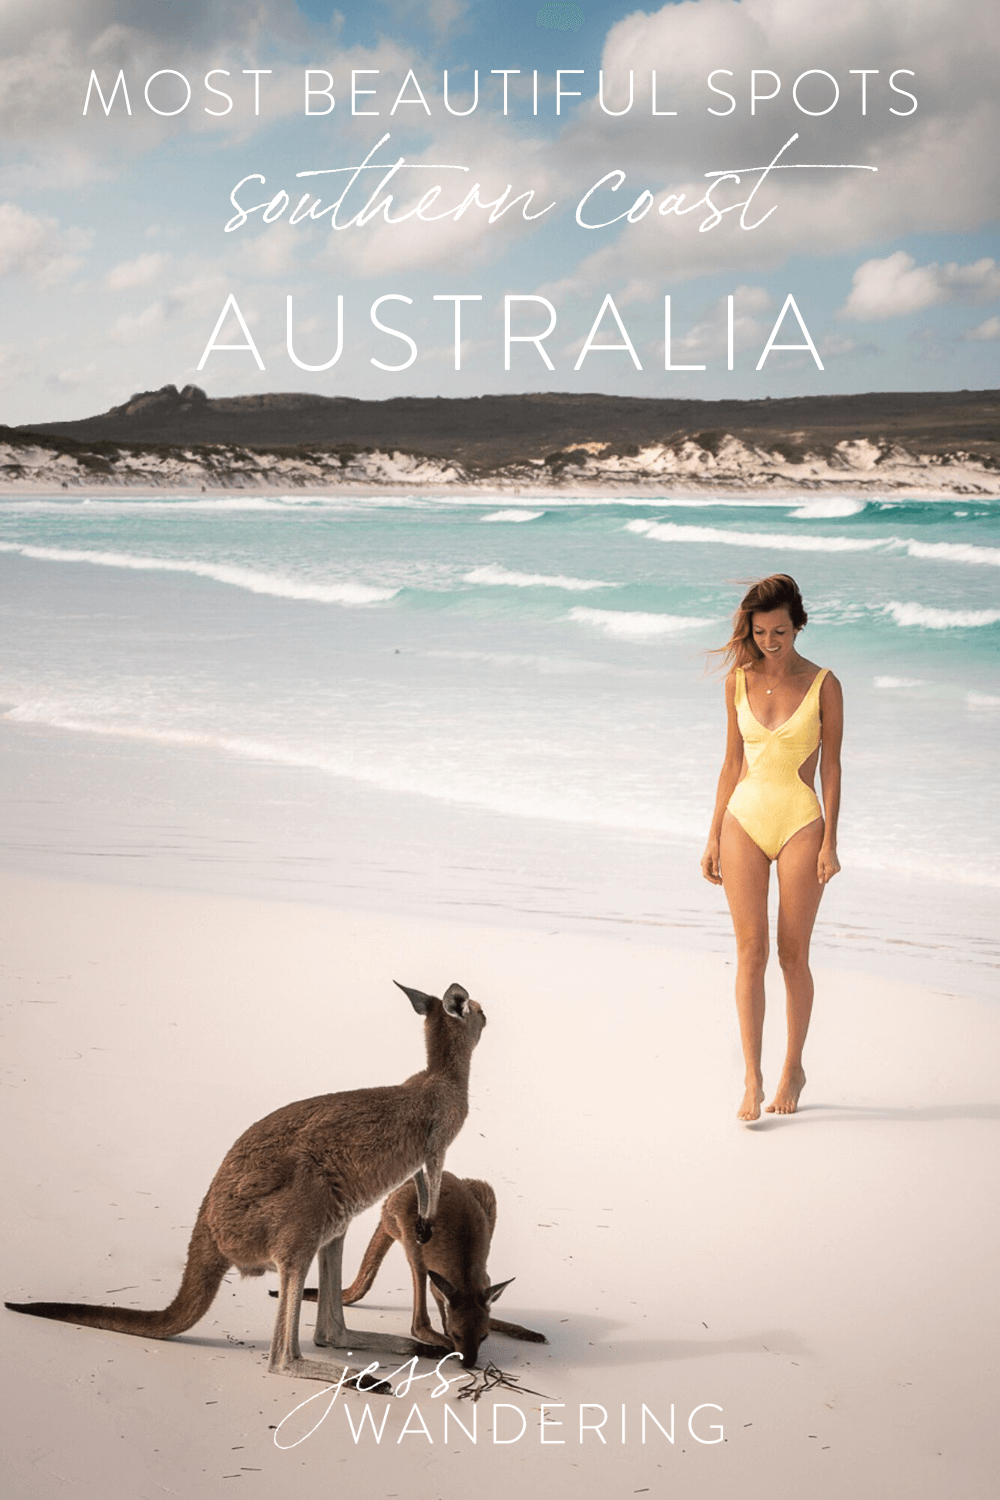 The most beautiful destinations along Australia's southern coast.